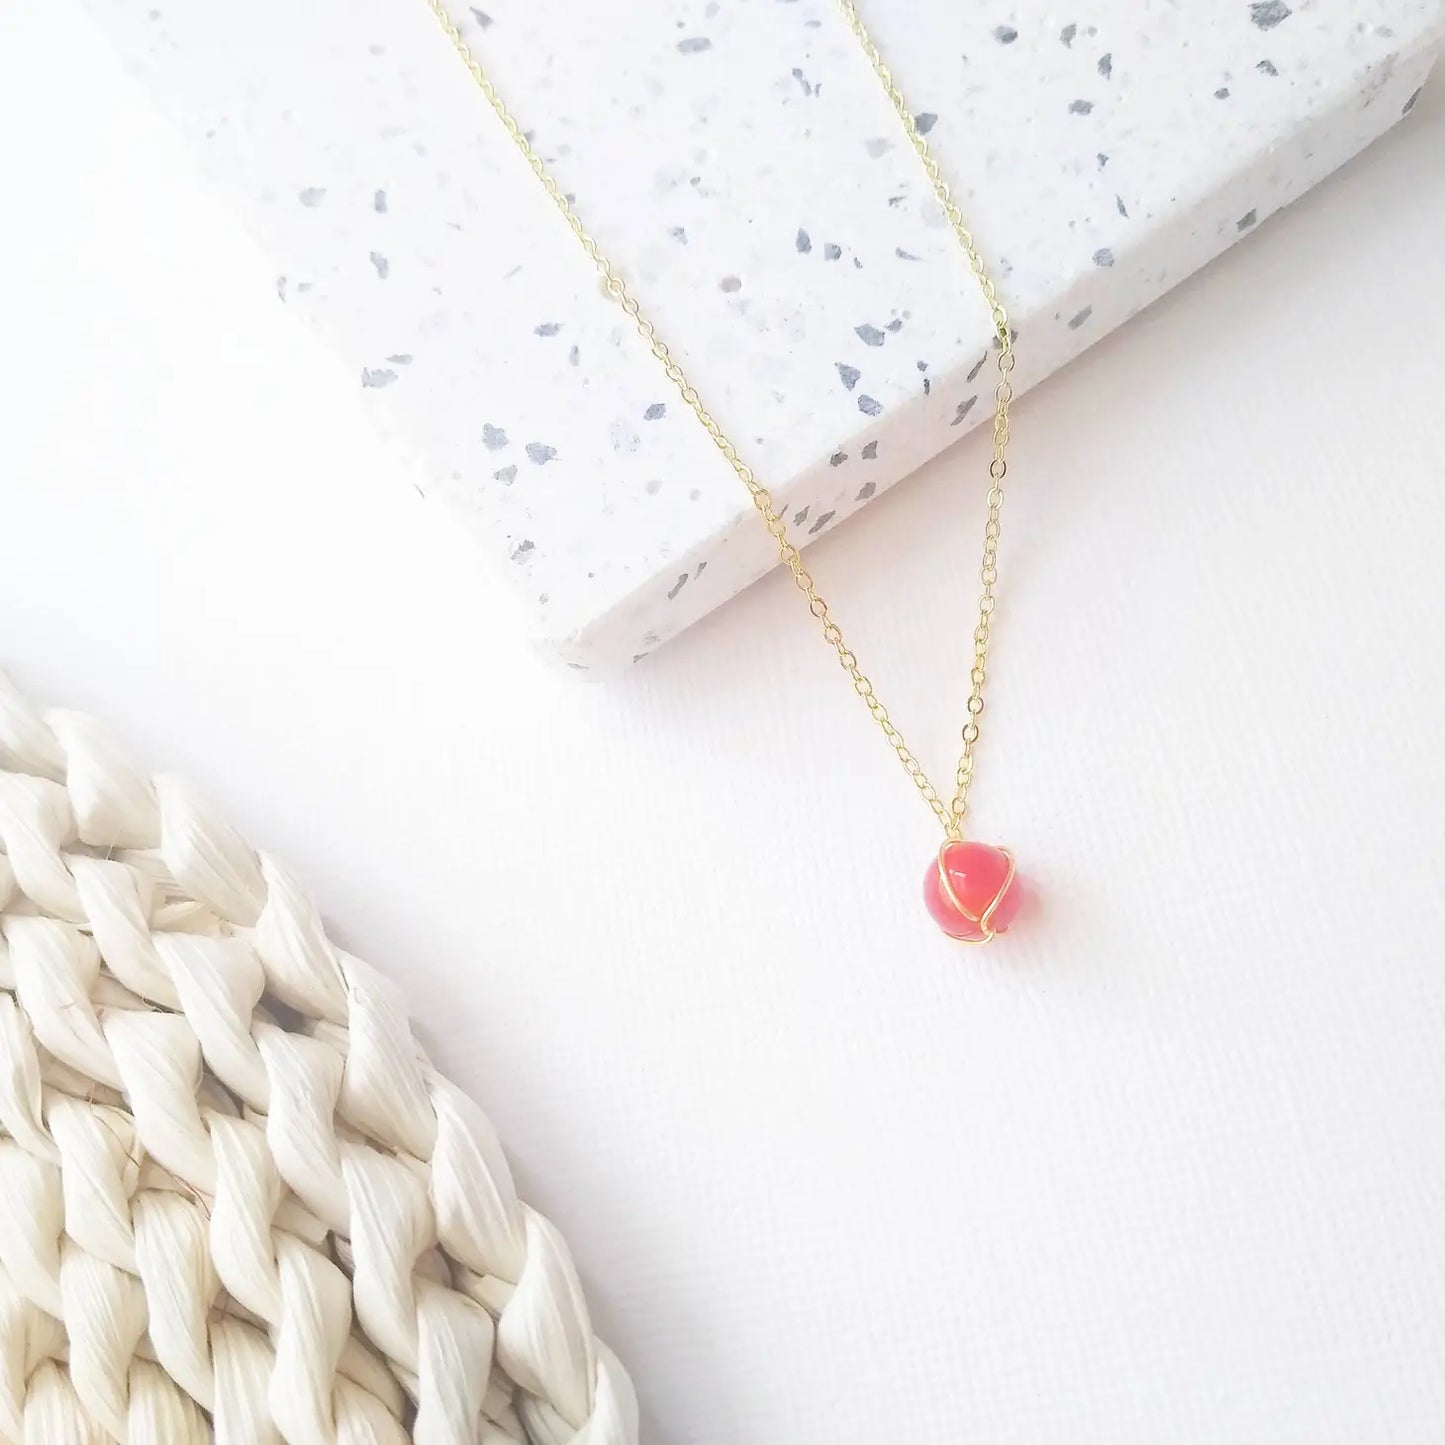 The Honey Necklace - Red Quartz Charm